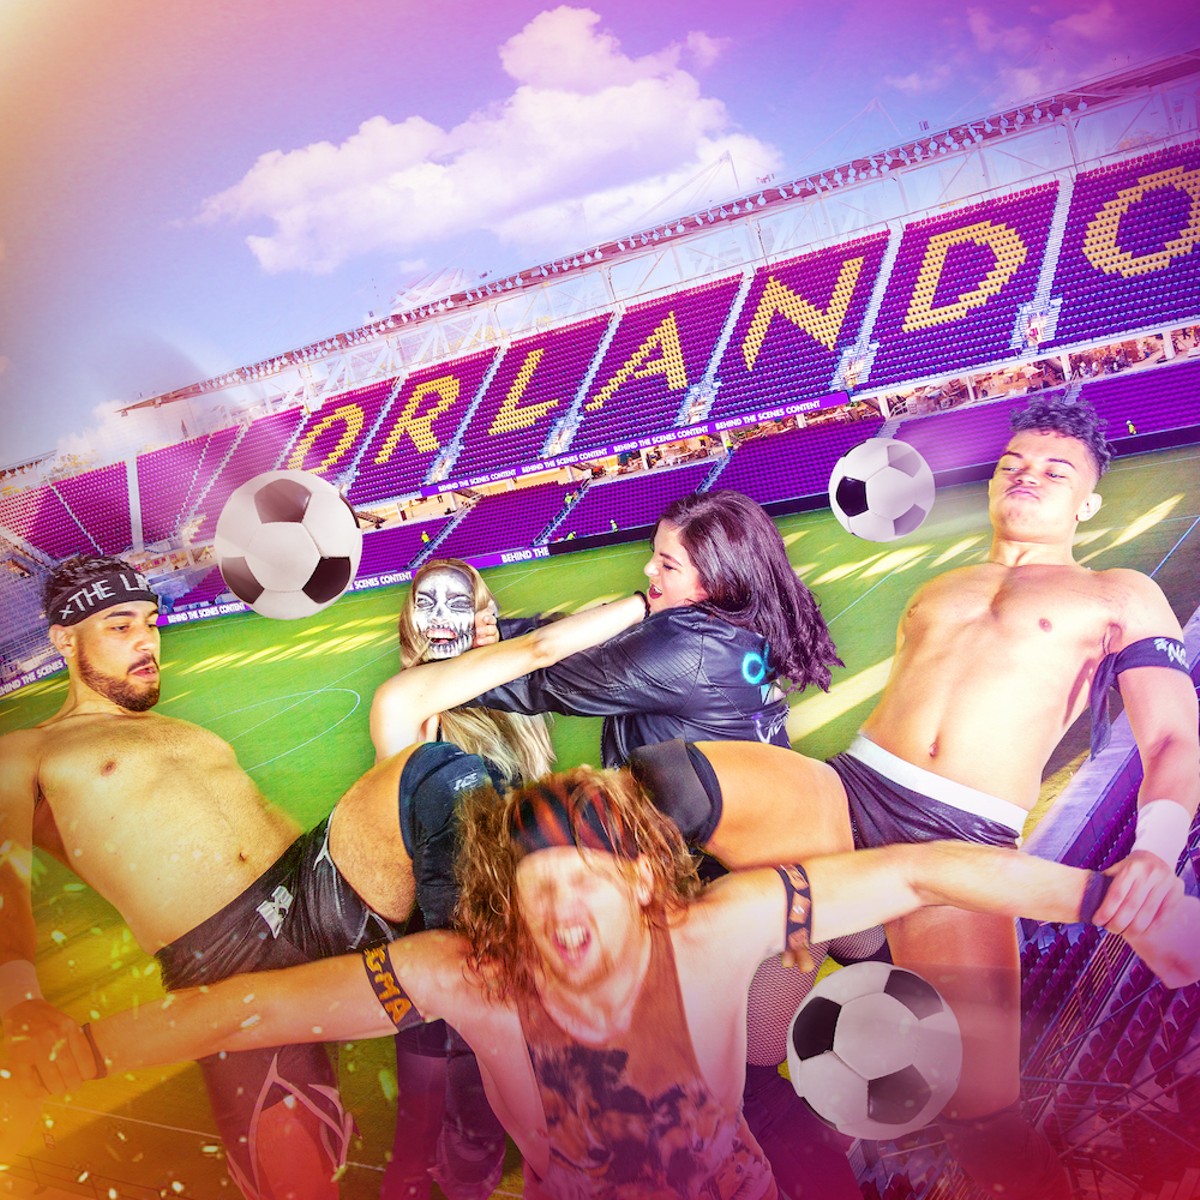 Sports & Recreation: Best of Orlando 2019